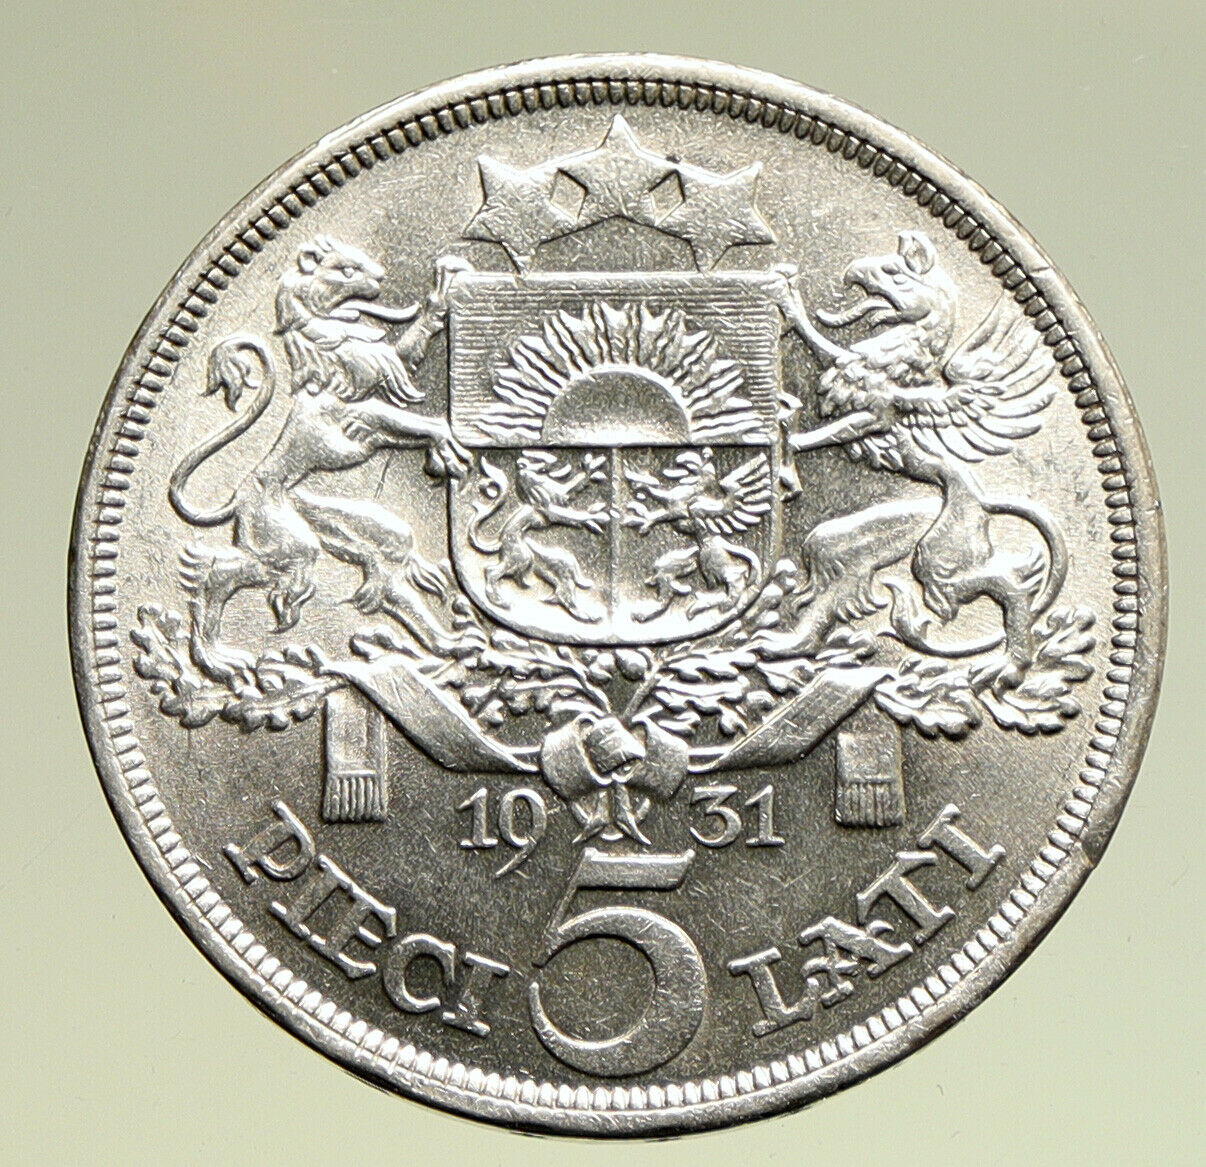 1931 LATVIA w Female Headwear 5 Lati LARGE Vintage Silver European Coin i95008